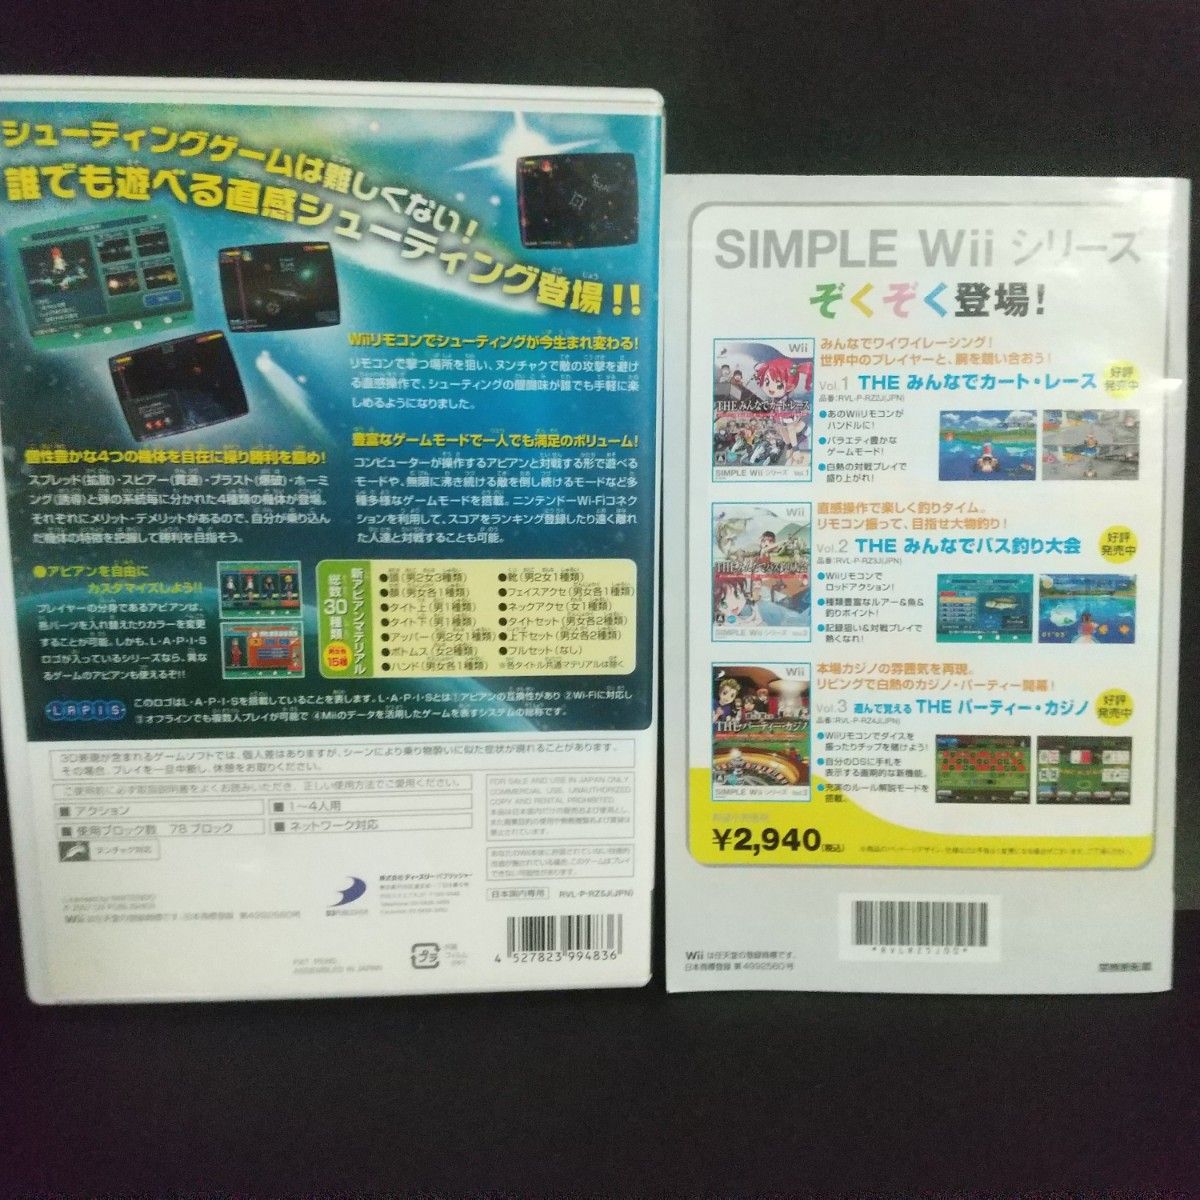 【Wii】 SIMPLE Wiiシリーズ Vol.4 THE シューティング・アクション